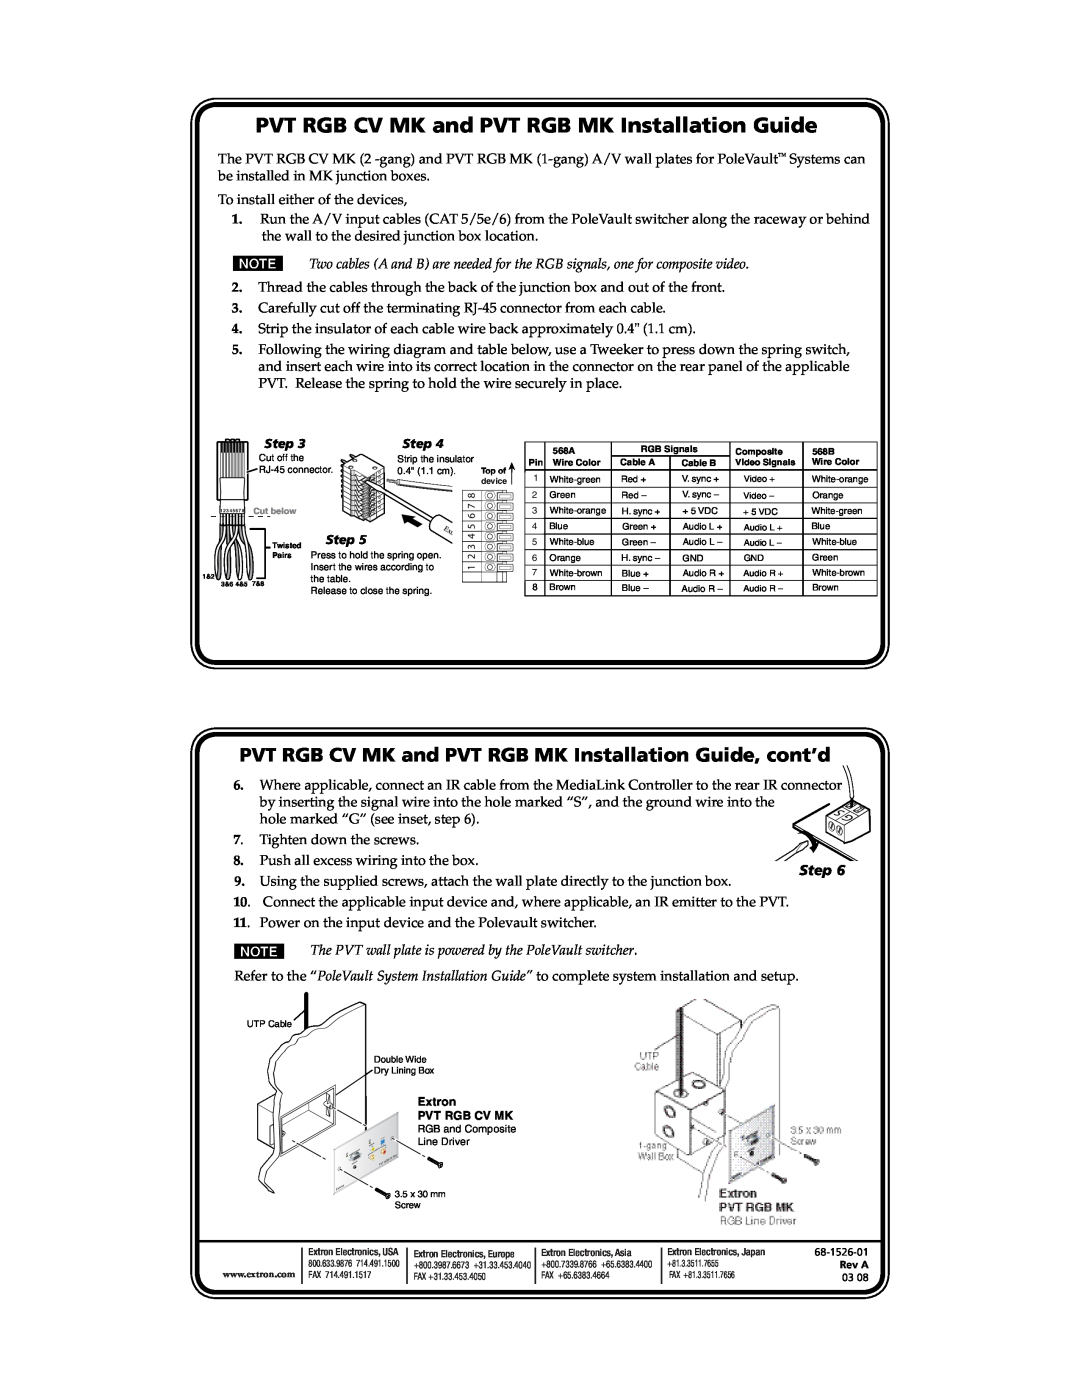 Extron electronic manual PVT RGB CV MK and PVT RGB MK Installation Guide, Step 